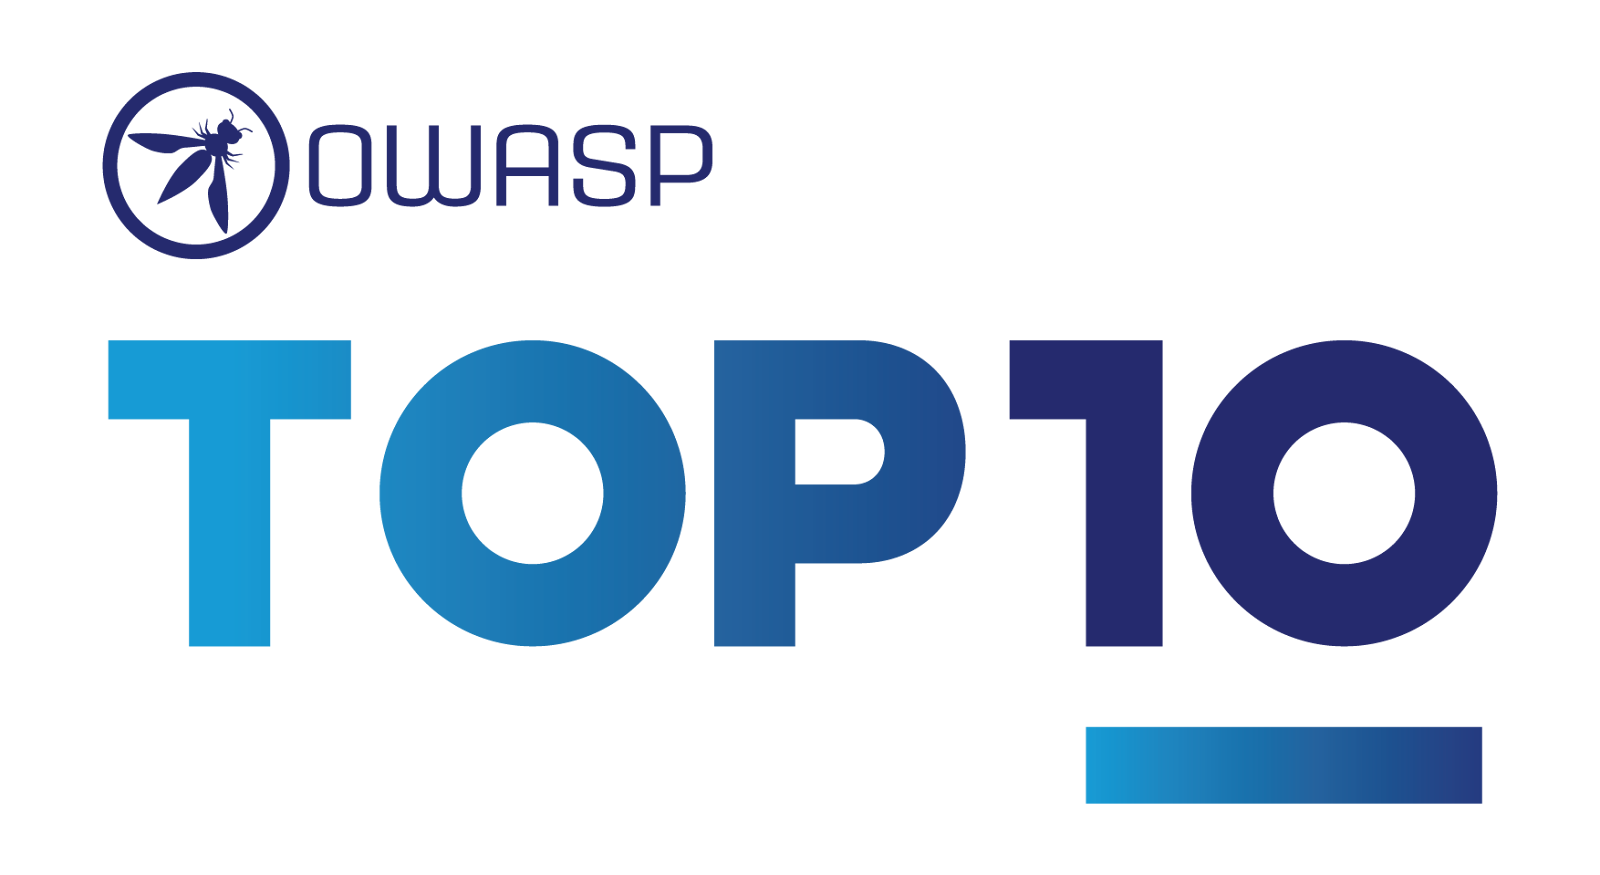 owasp top 10 logo